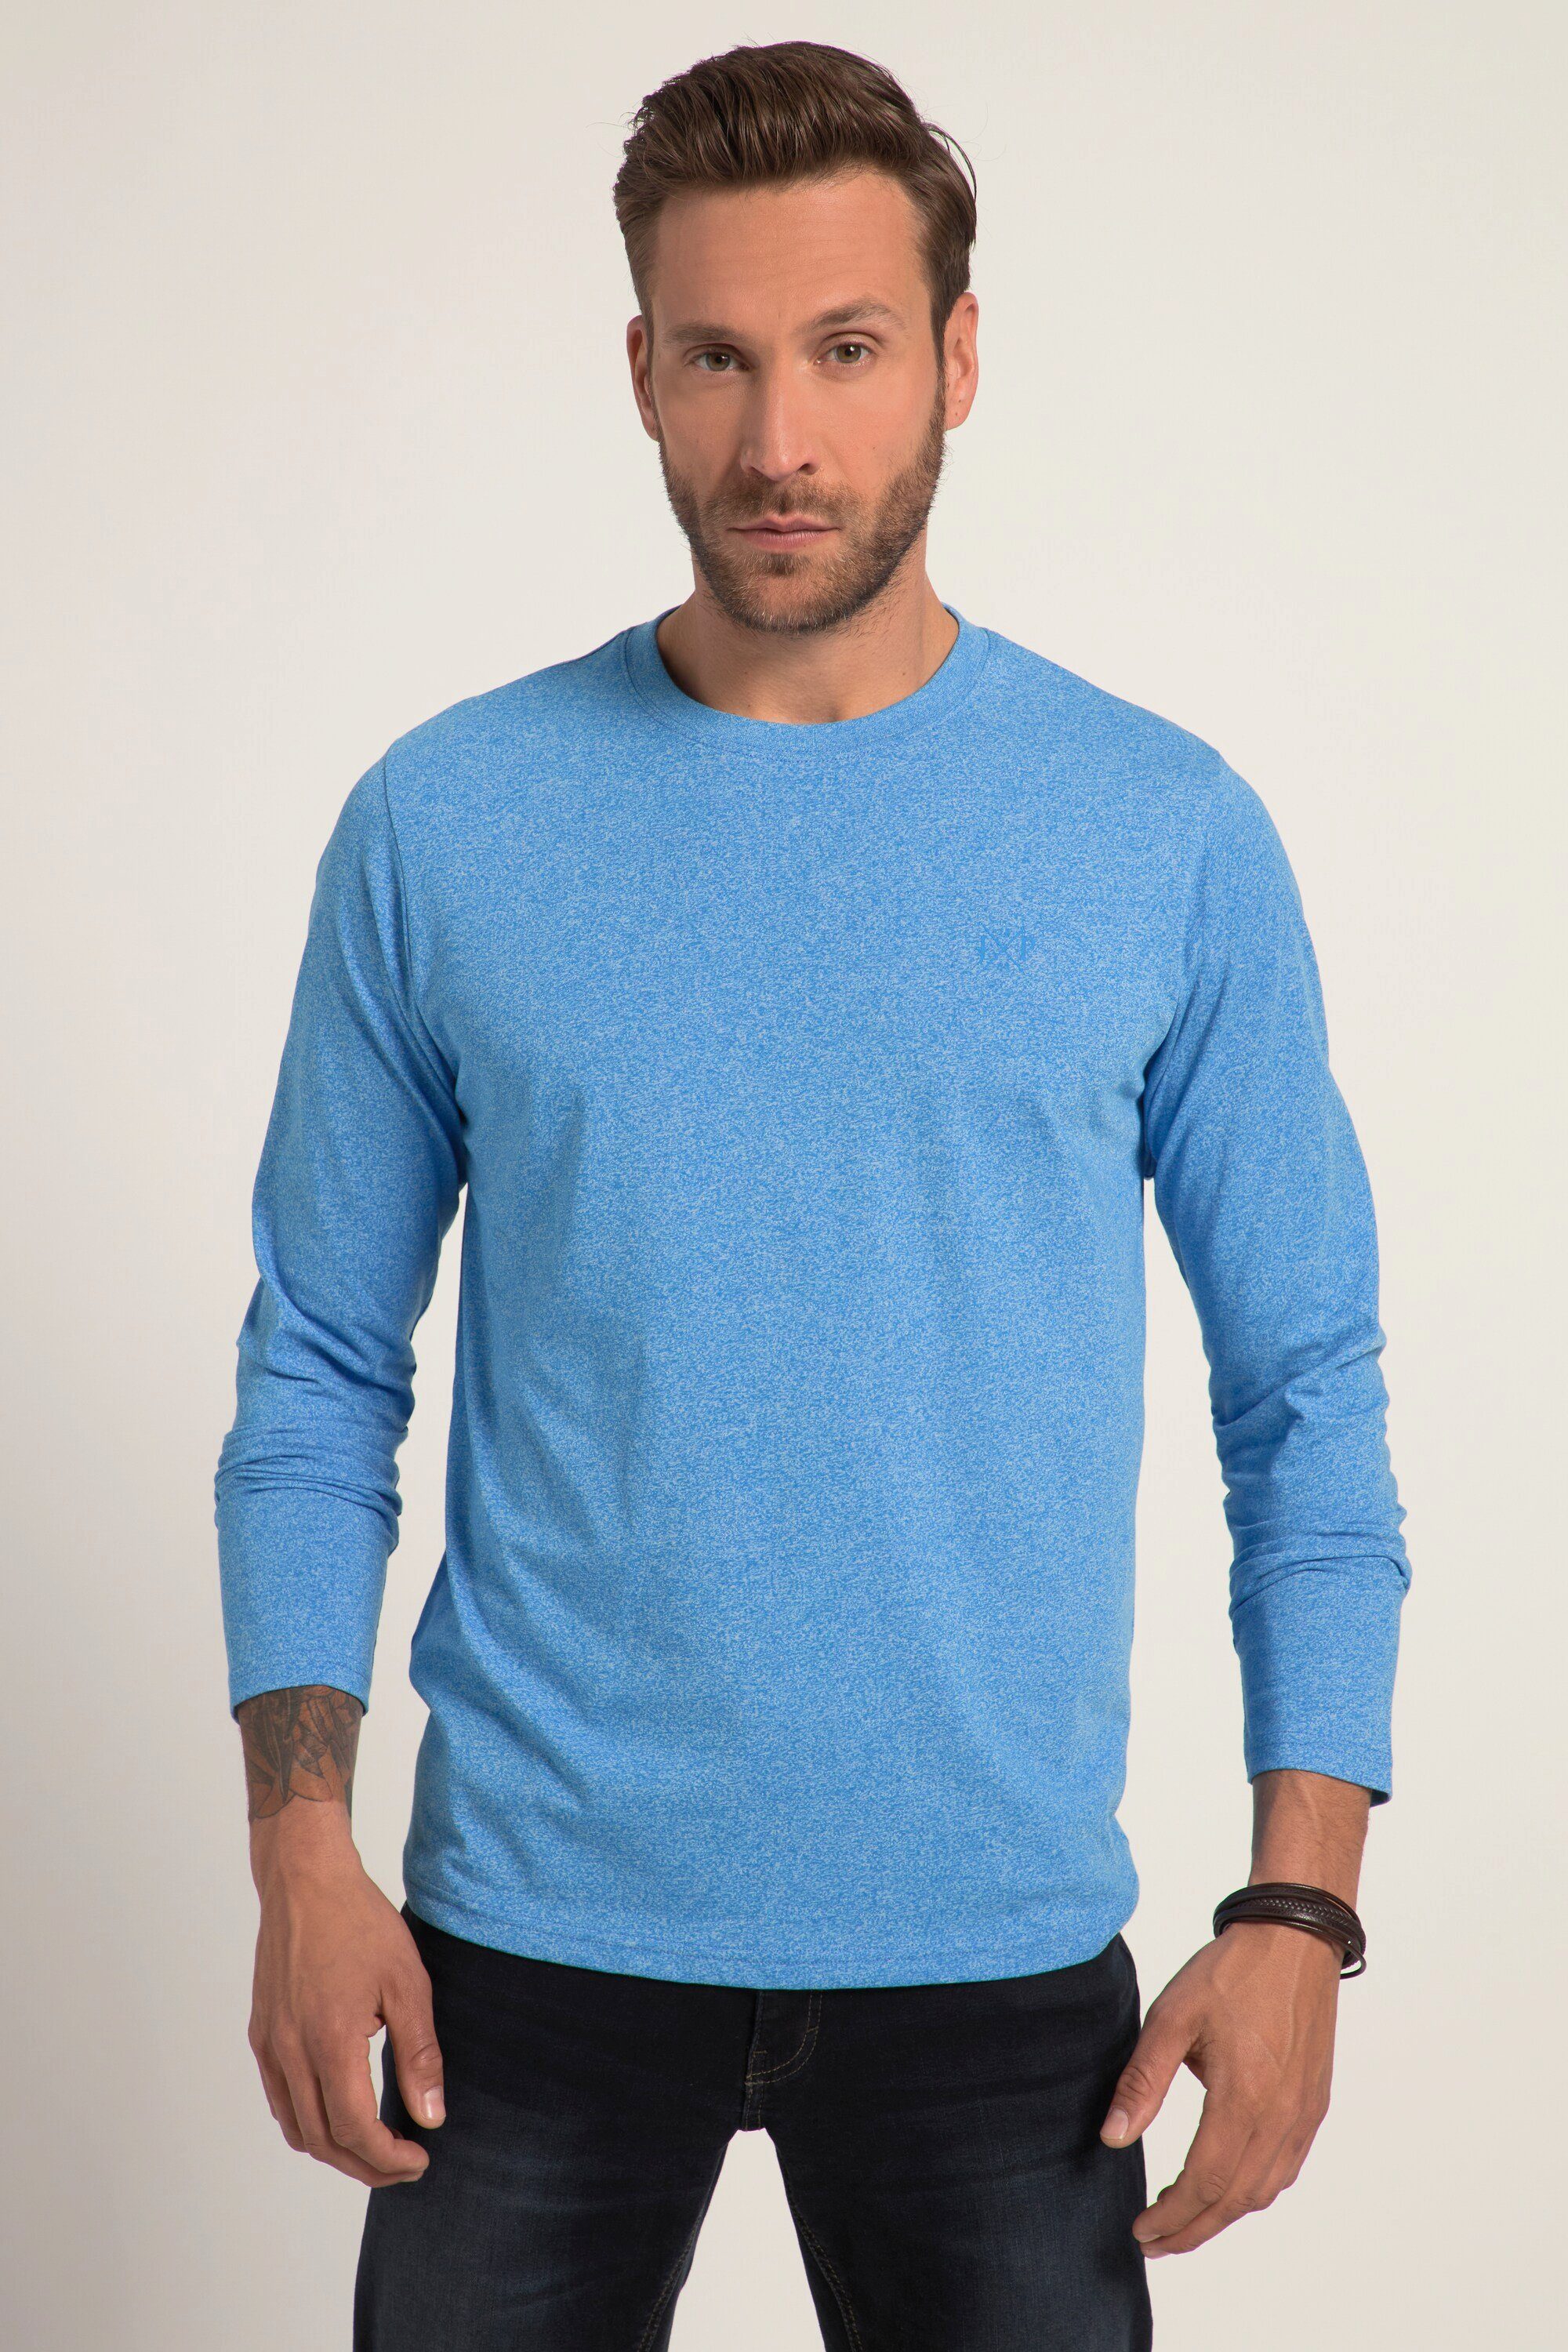 JP1880 T-Shirt Langarmshirt Rundhals hochwertige Melange Jersey